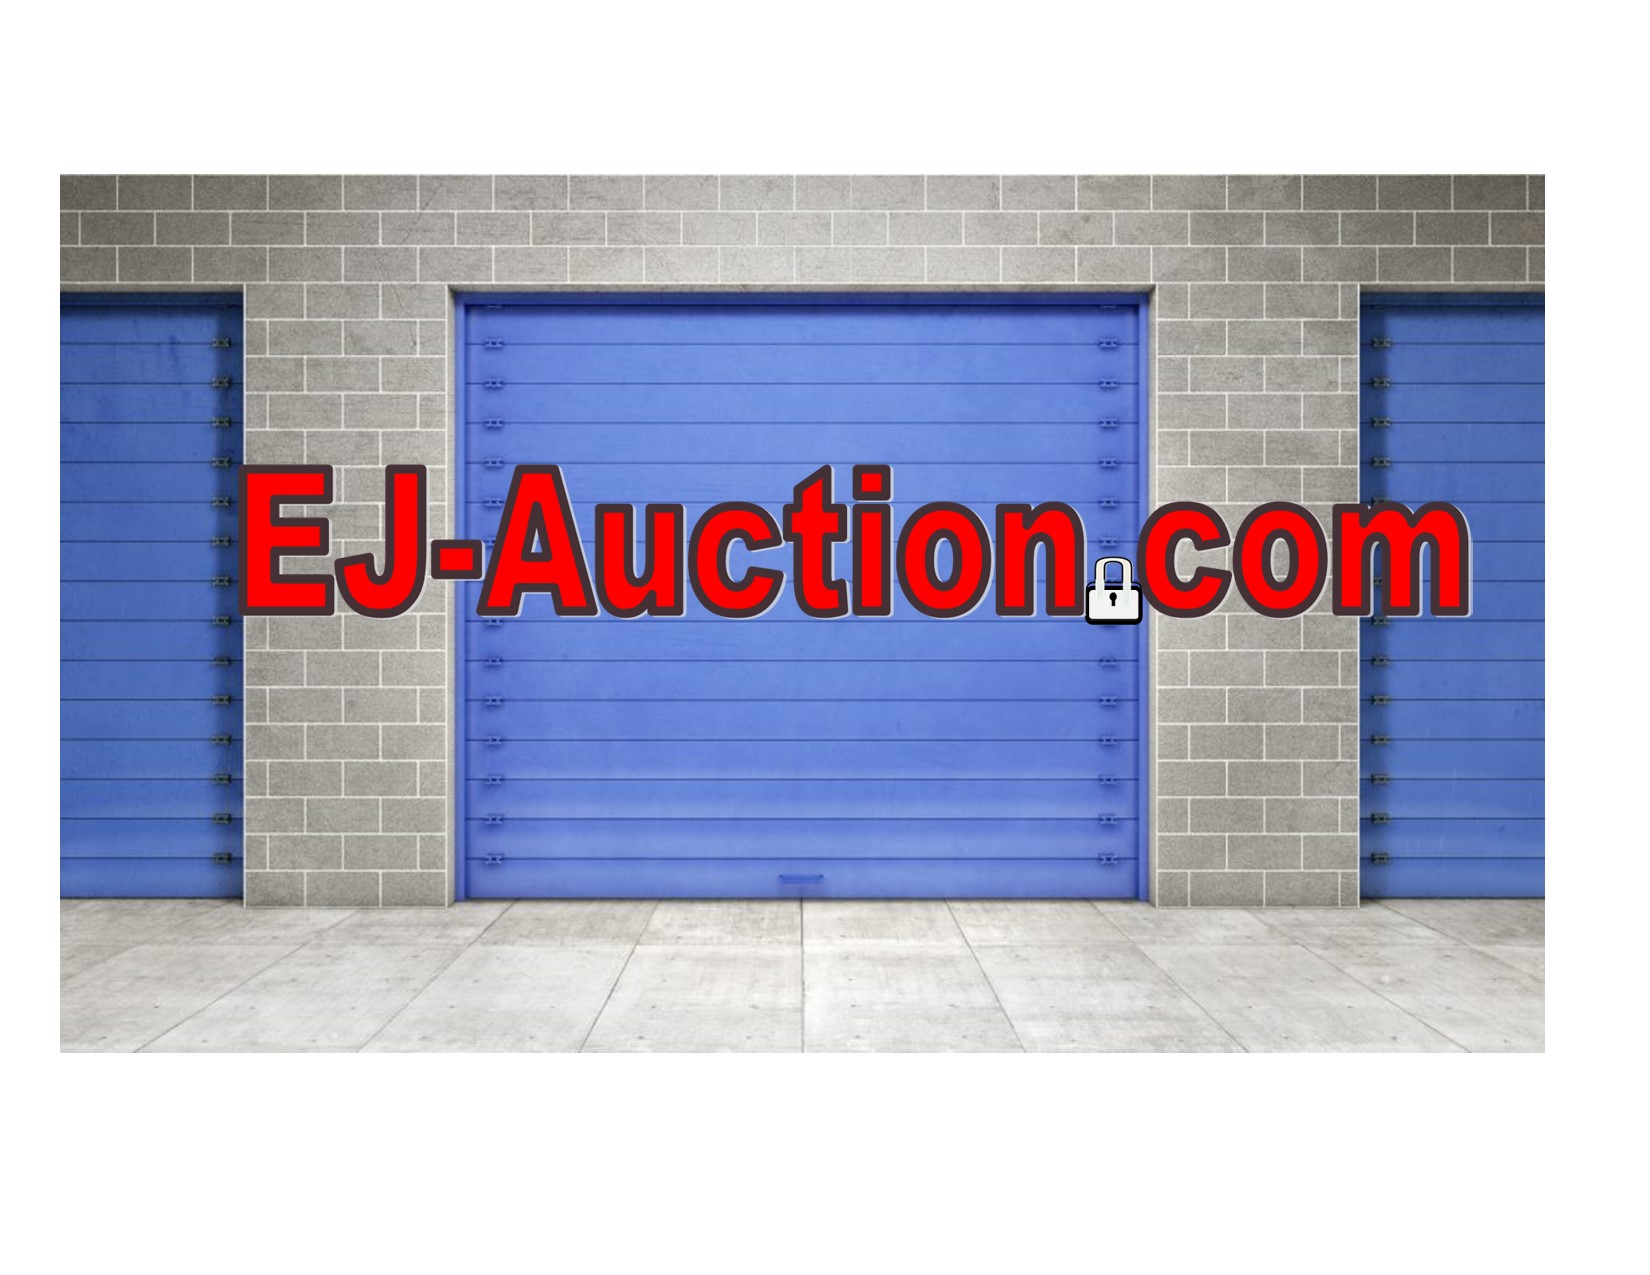 Edward Johnson Auctioneers Inc